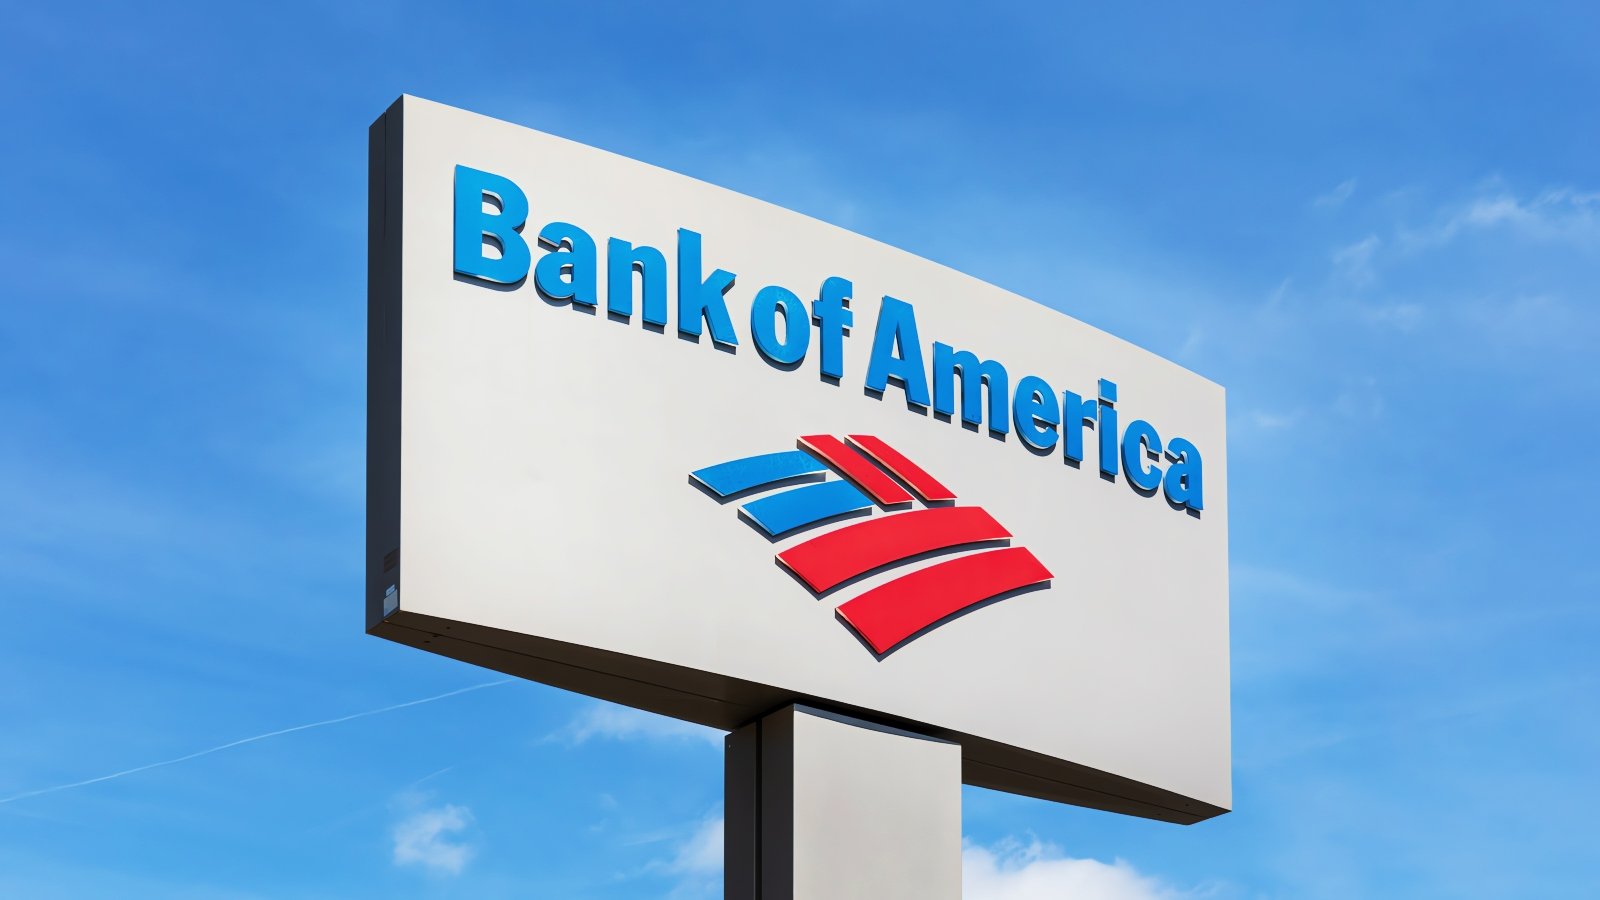 Bank of America warns customers of data breach after vendor hack